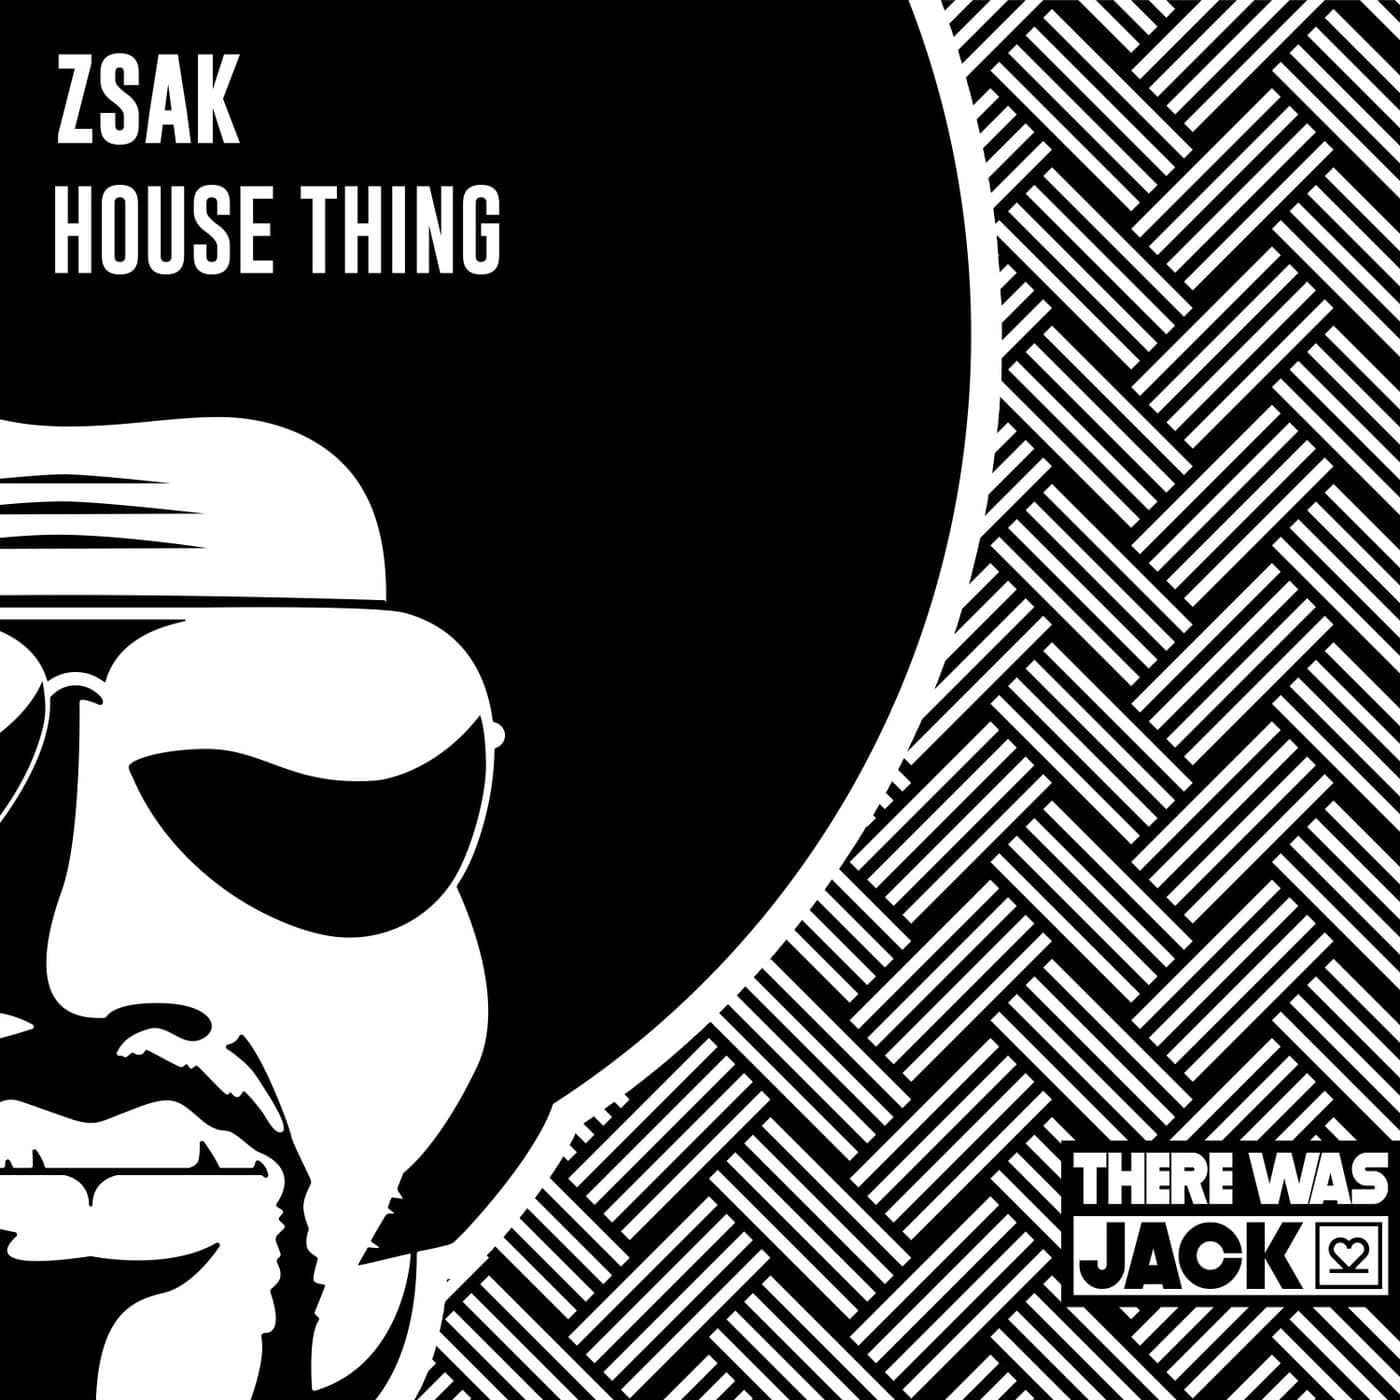 image cover: Zsak - House Thing / TWJ072